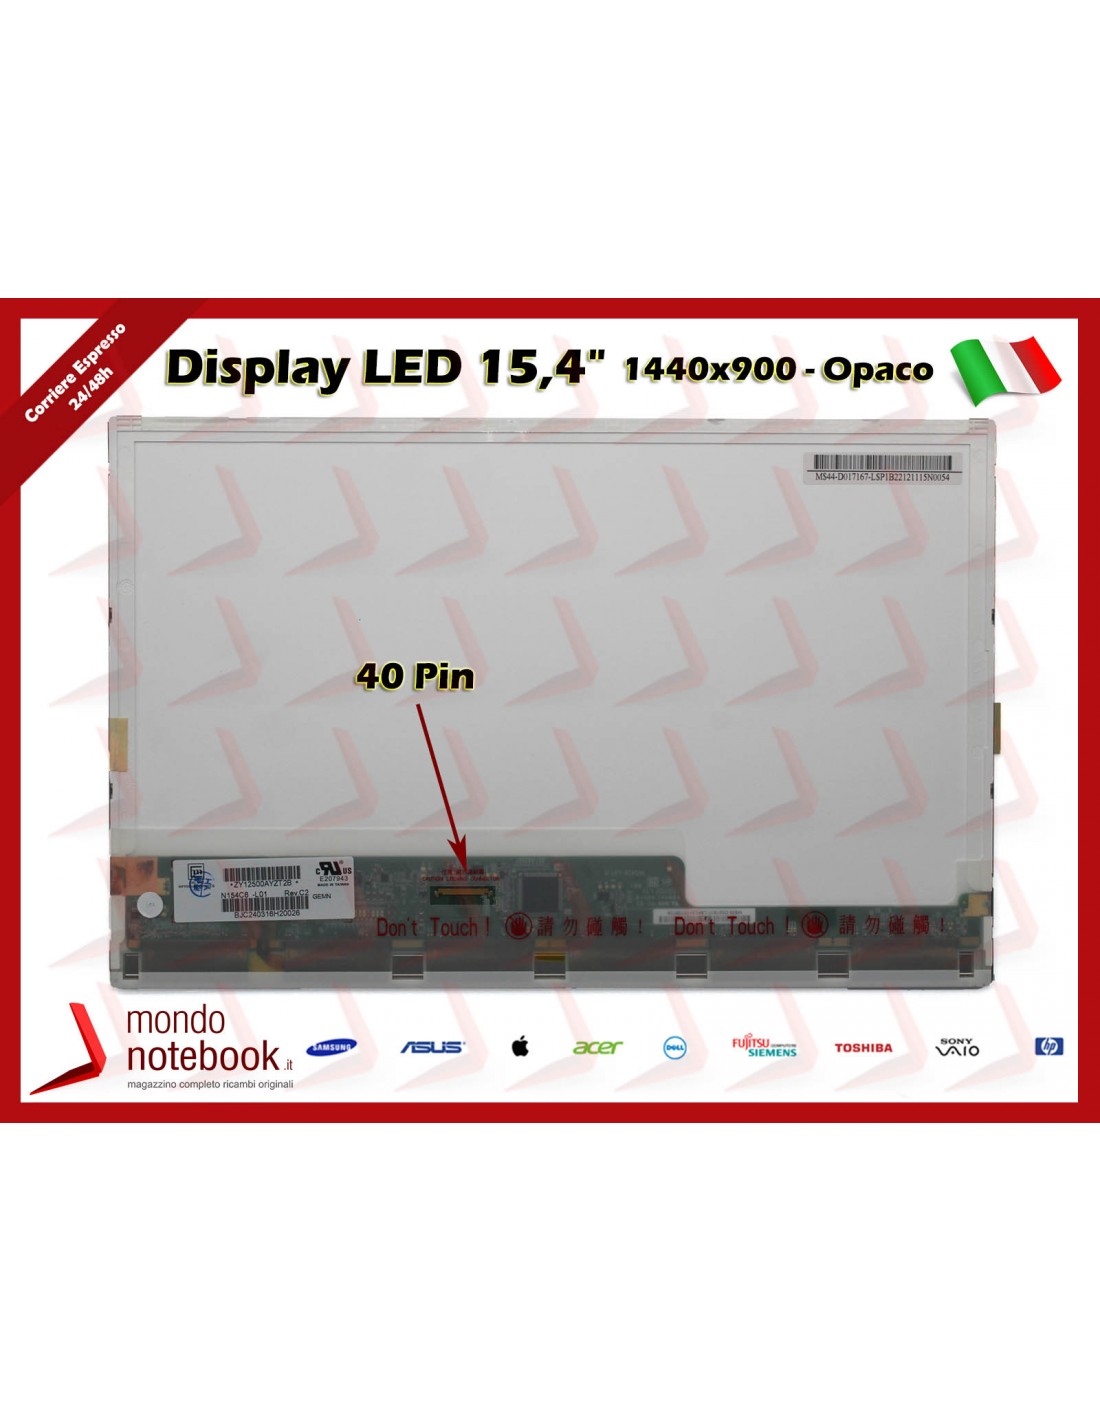 Display LED 15,4